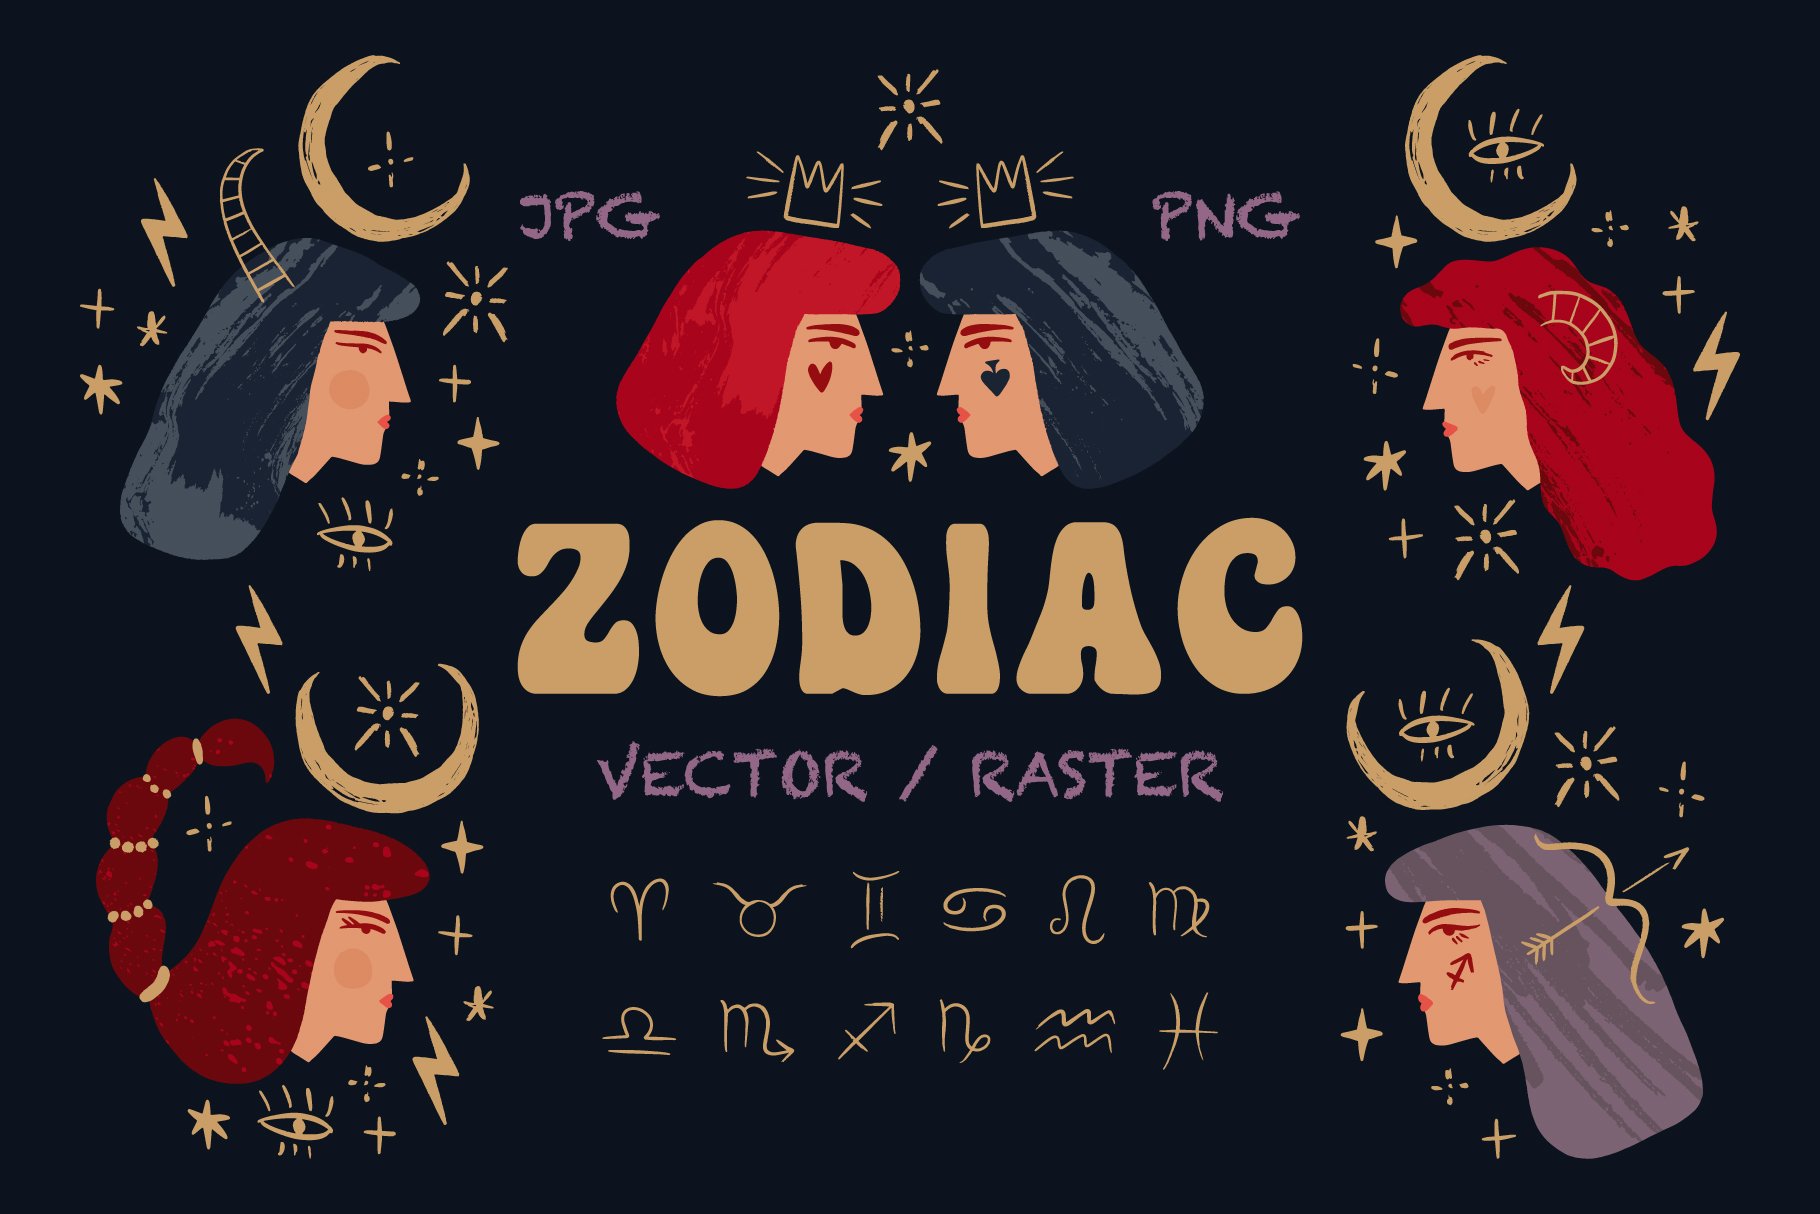 Zodiac Girls Bundle cover image.